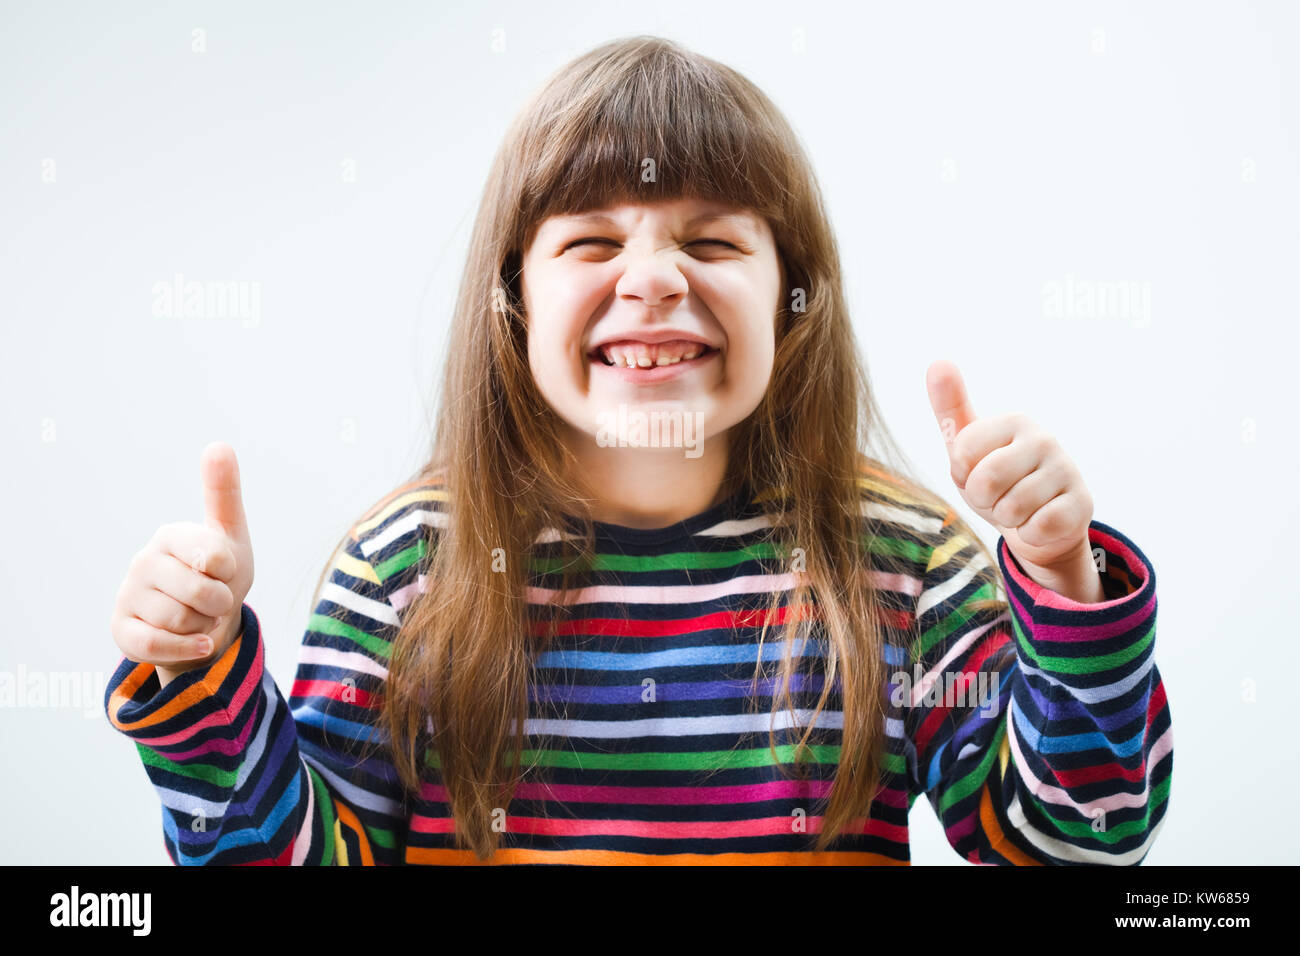 Portrait of cheerful child Stock Photo